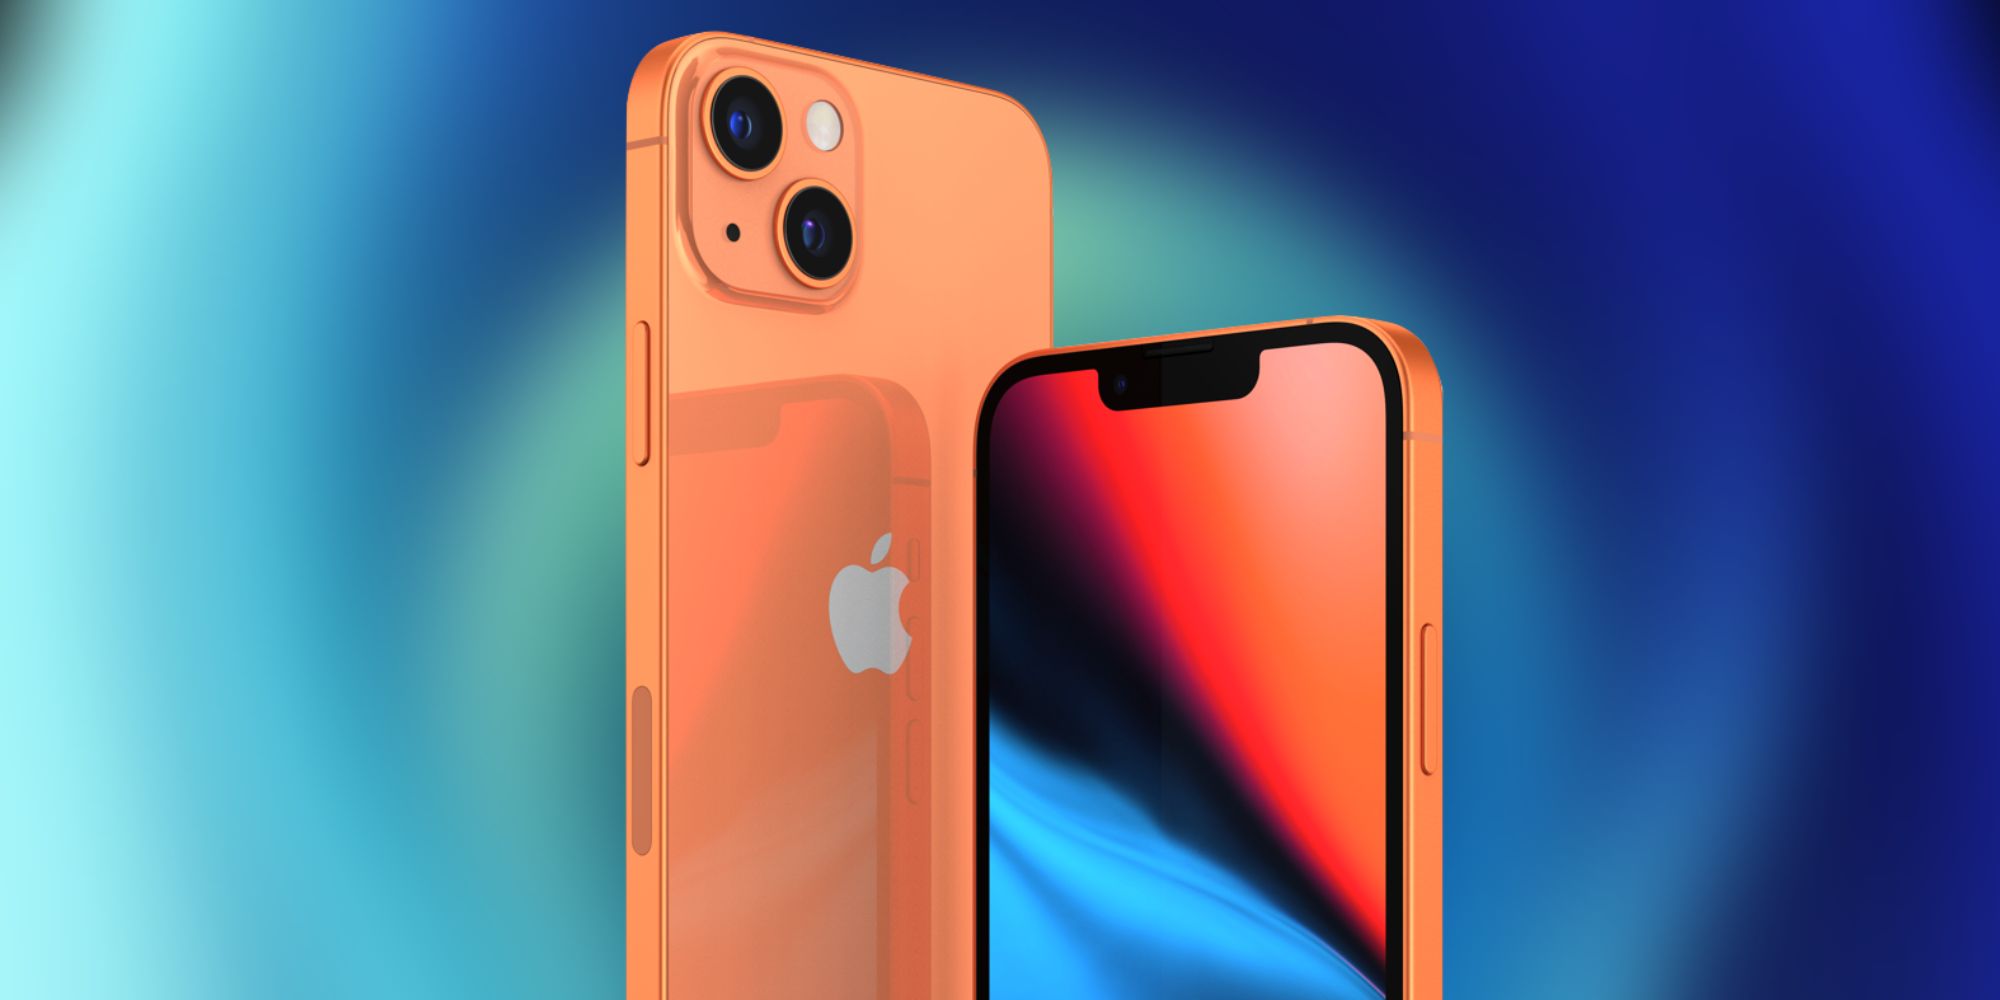 Render of an orange iPhone 13